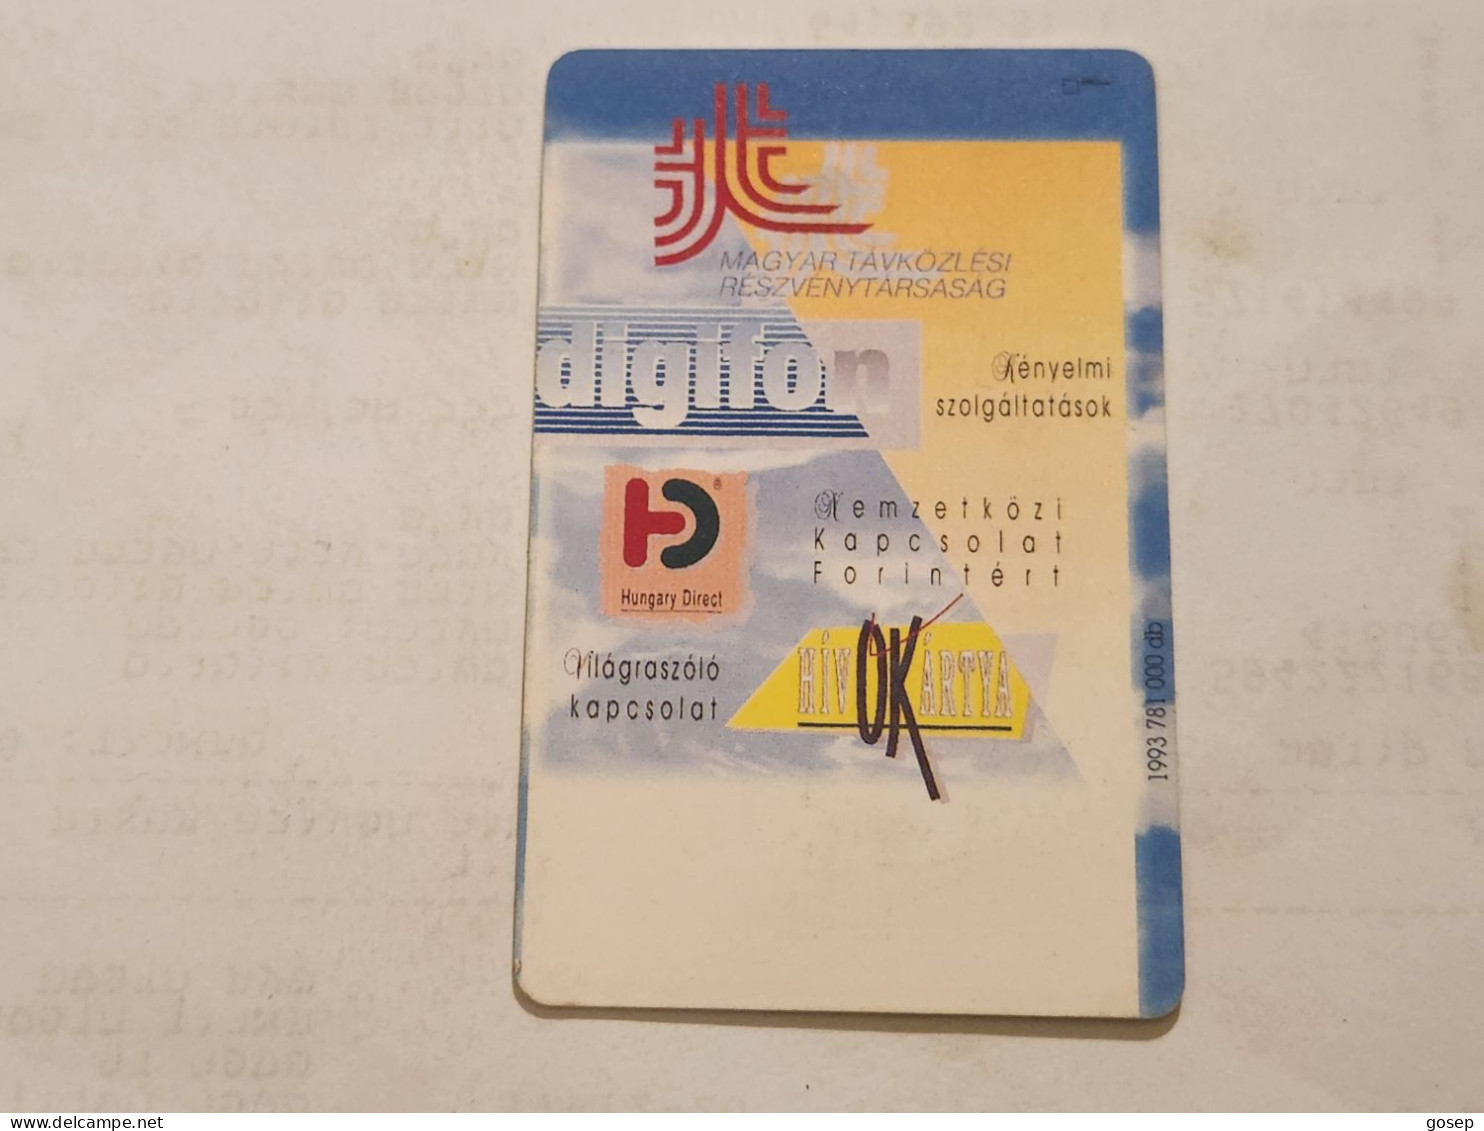 HUNGARY-(HU-P-1993-32Aa)-MATAV-(178)(500units)(11/93)(tirage-781.000)-USED CARD+1card Prepiad Free - Hongrie